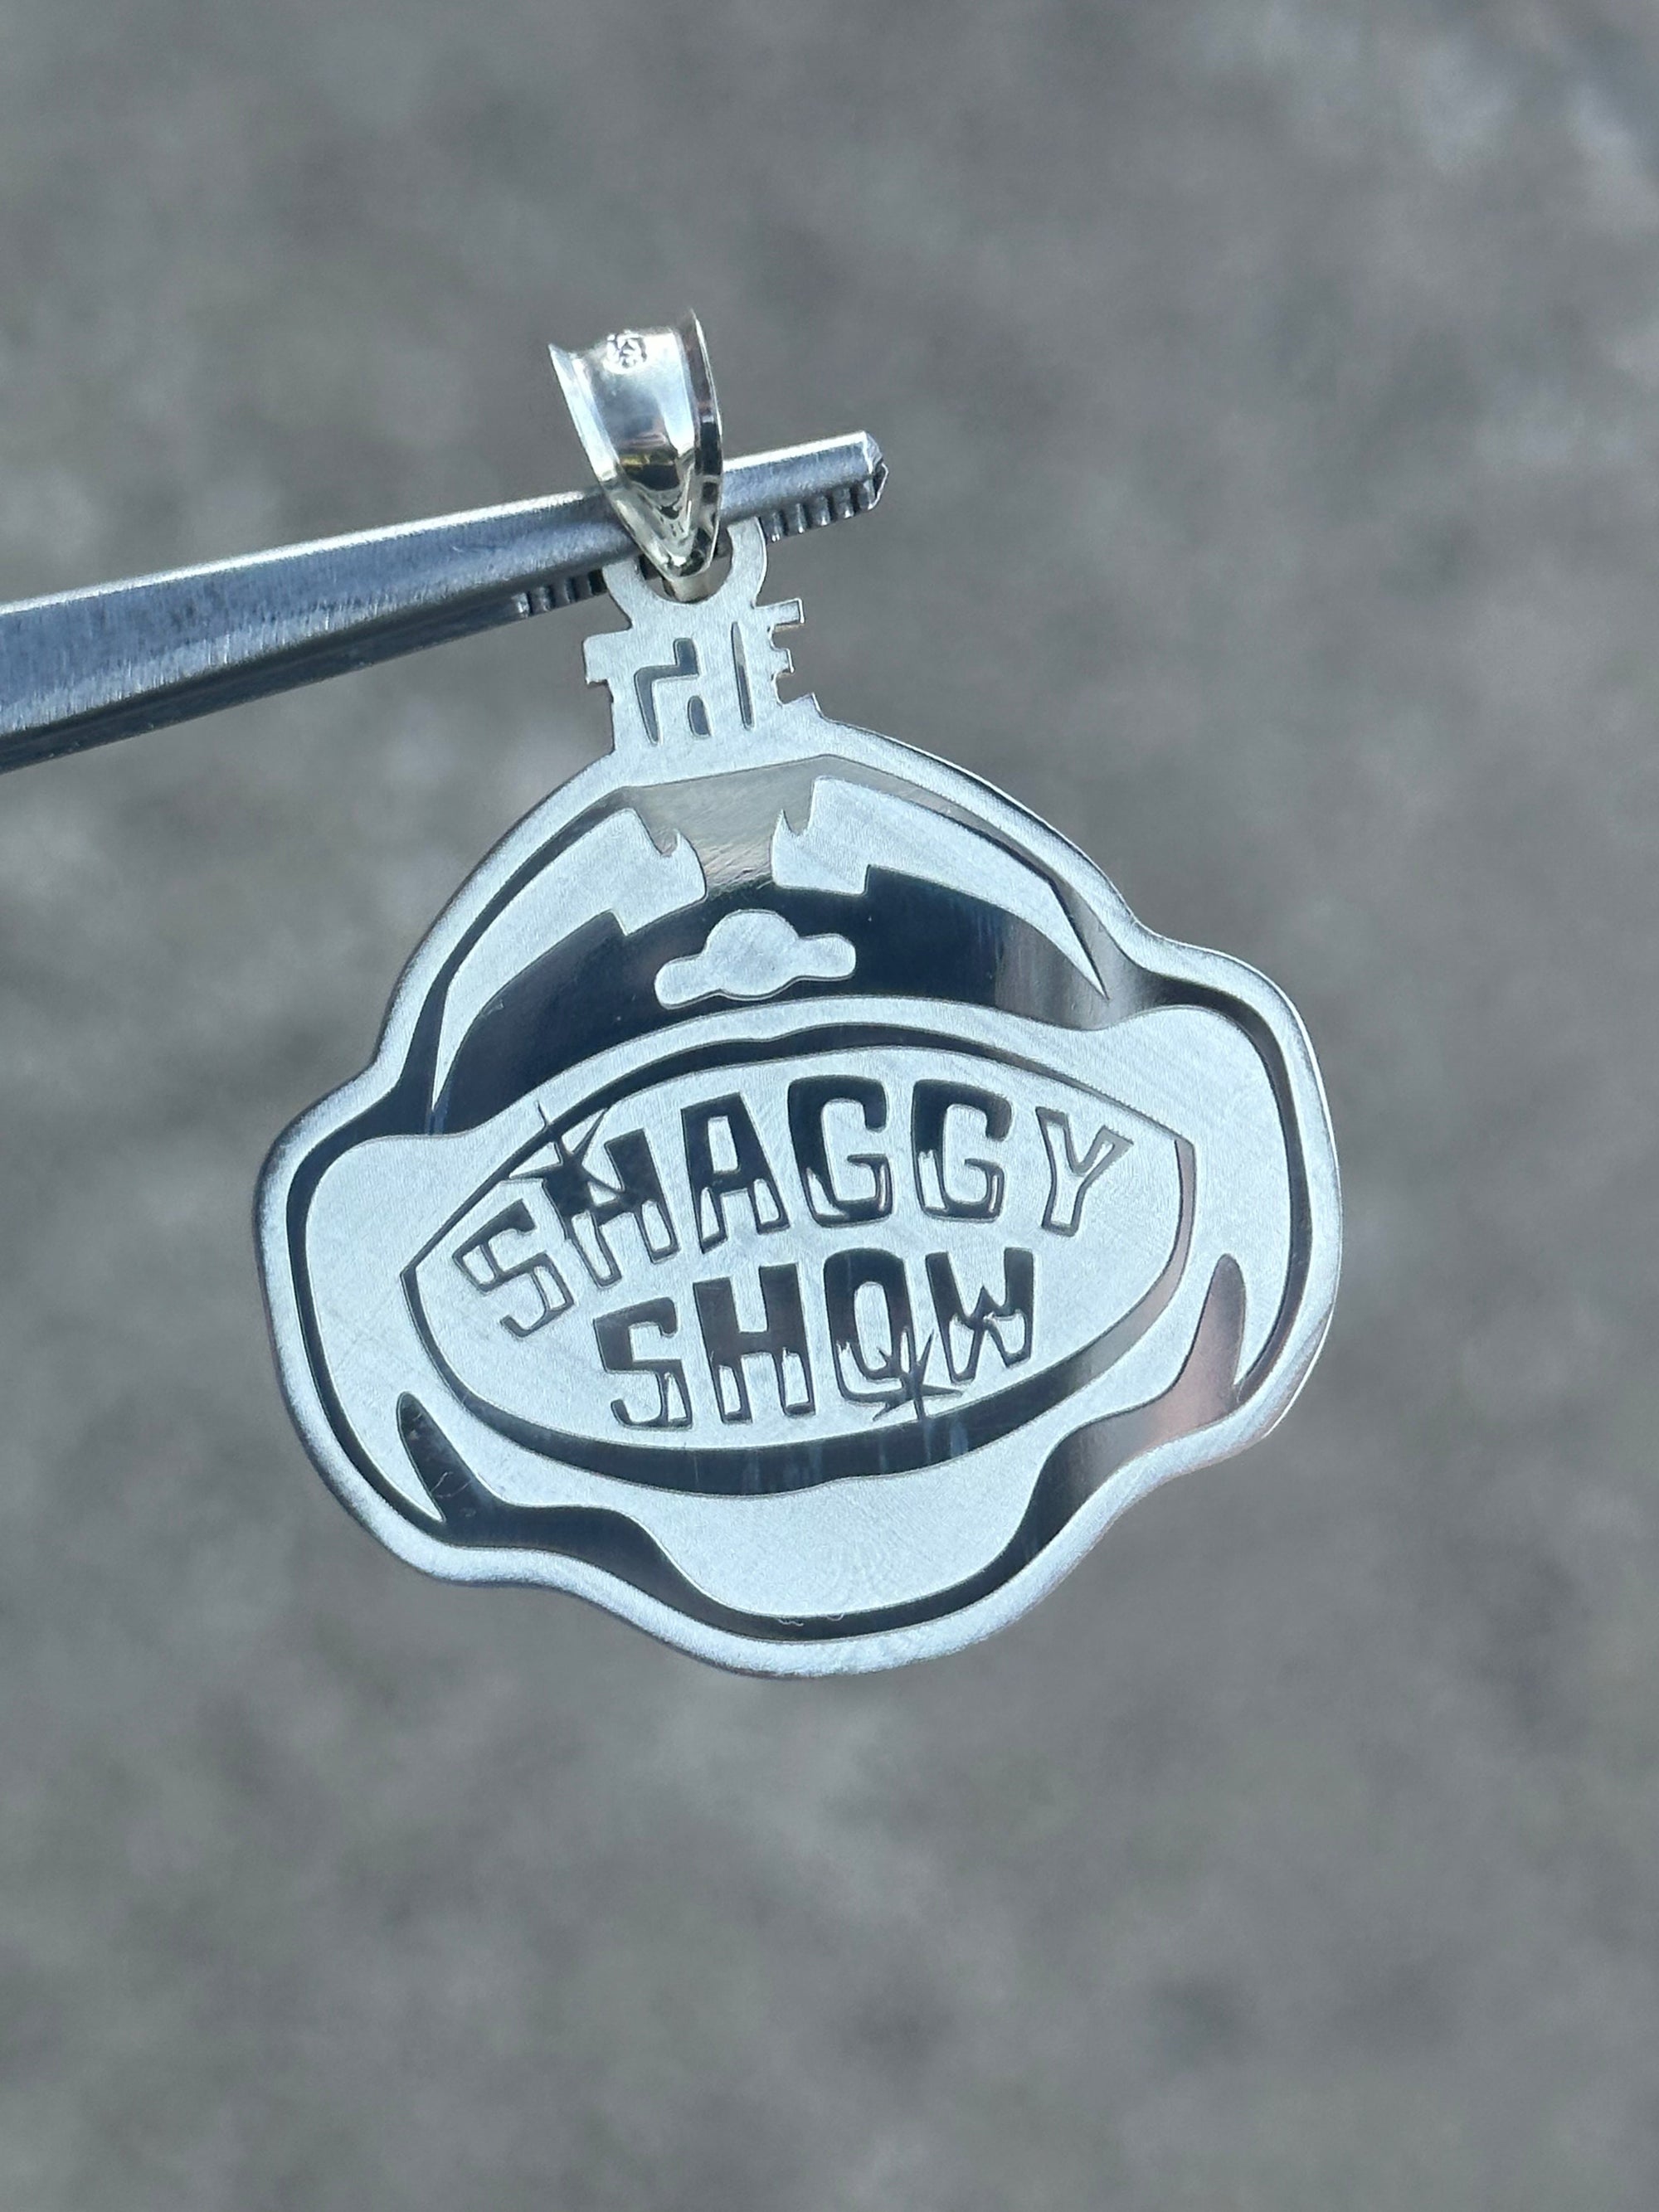 .925 Shaggy Show Pendant